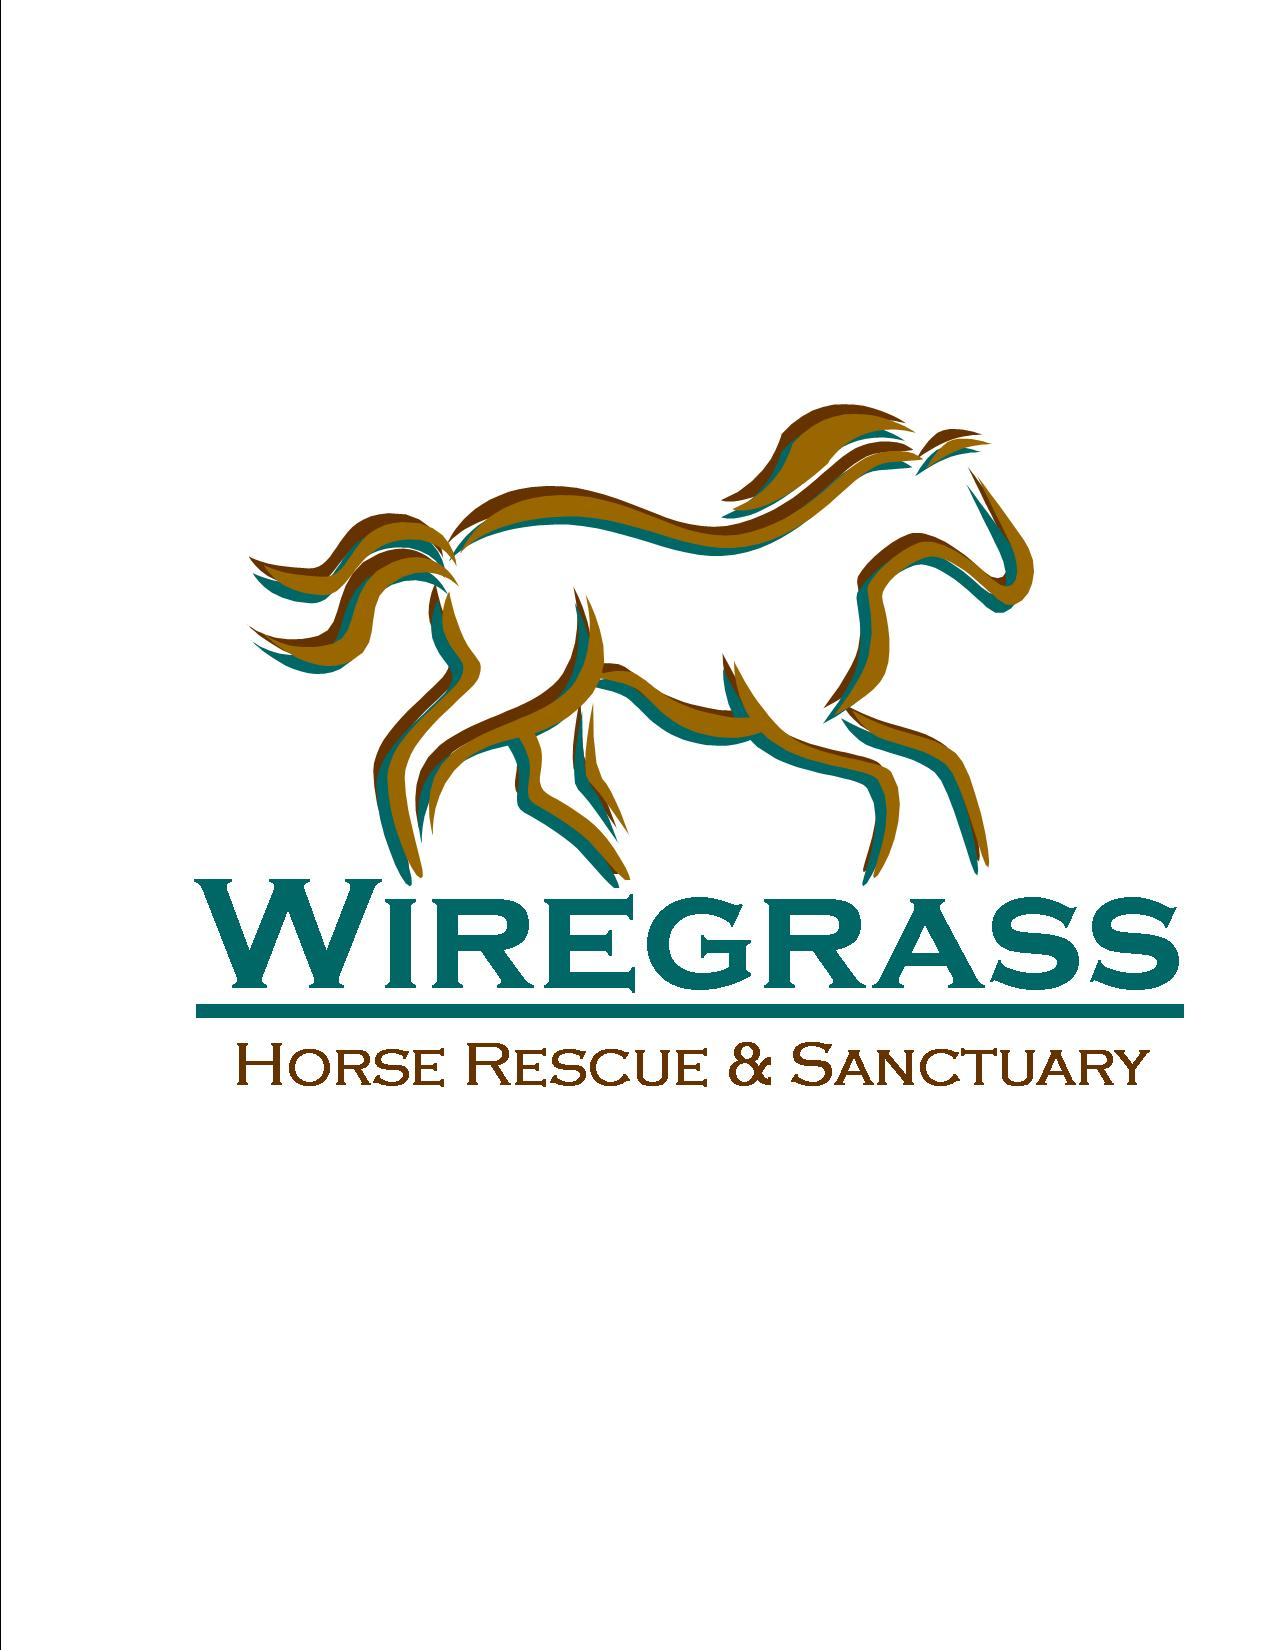 Wiregrass Horse Rescue & Sanctuary